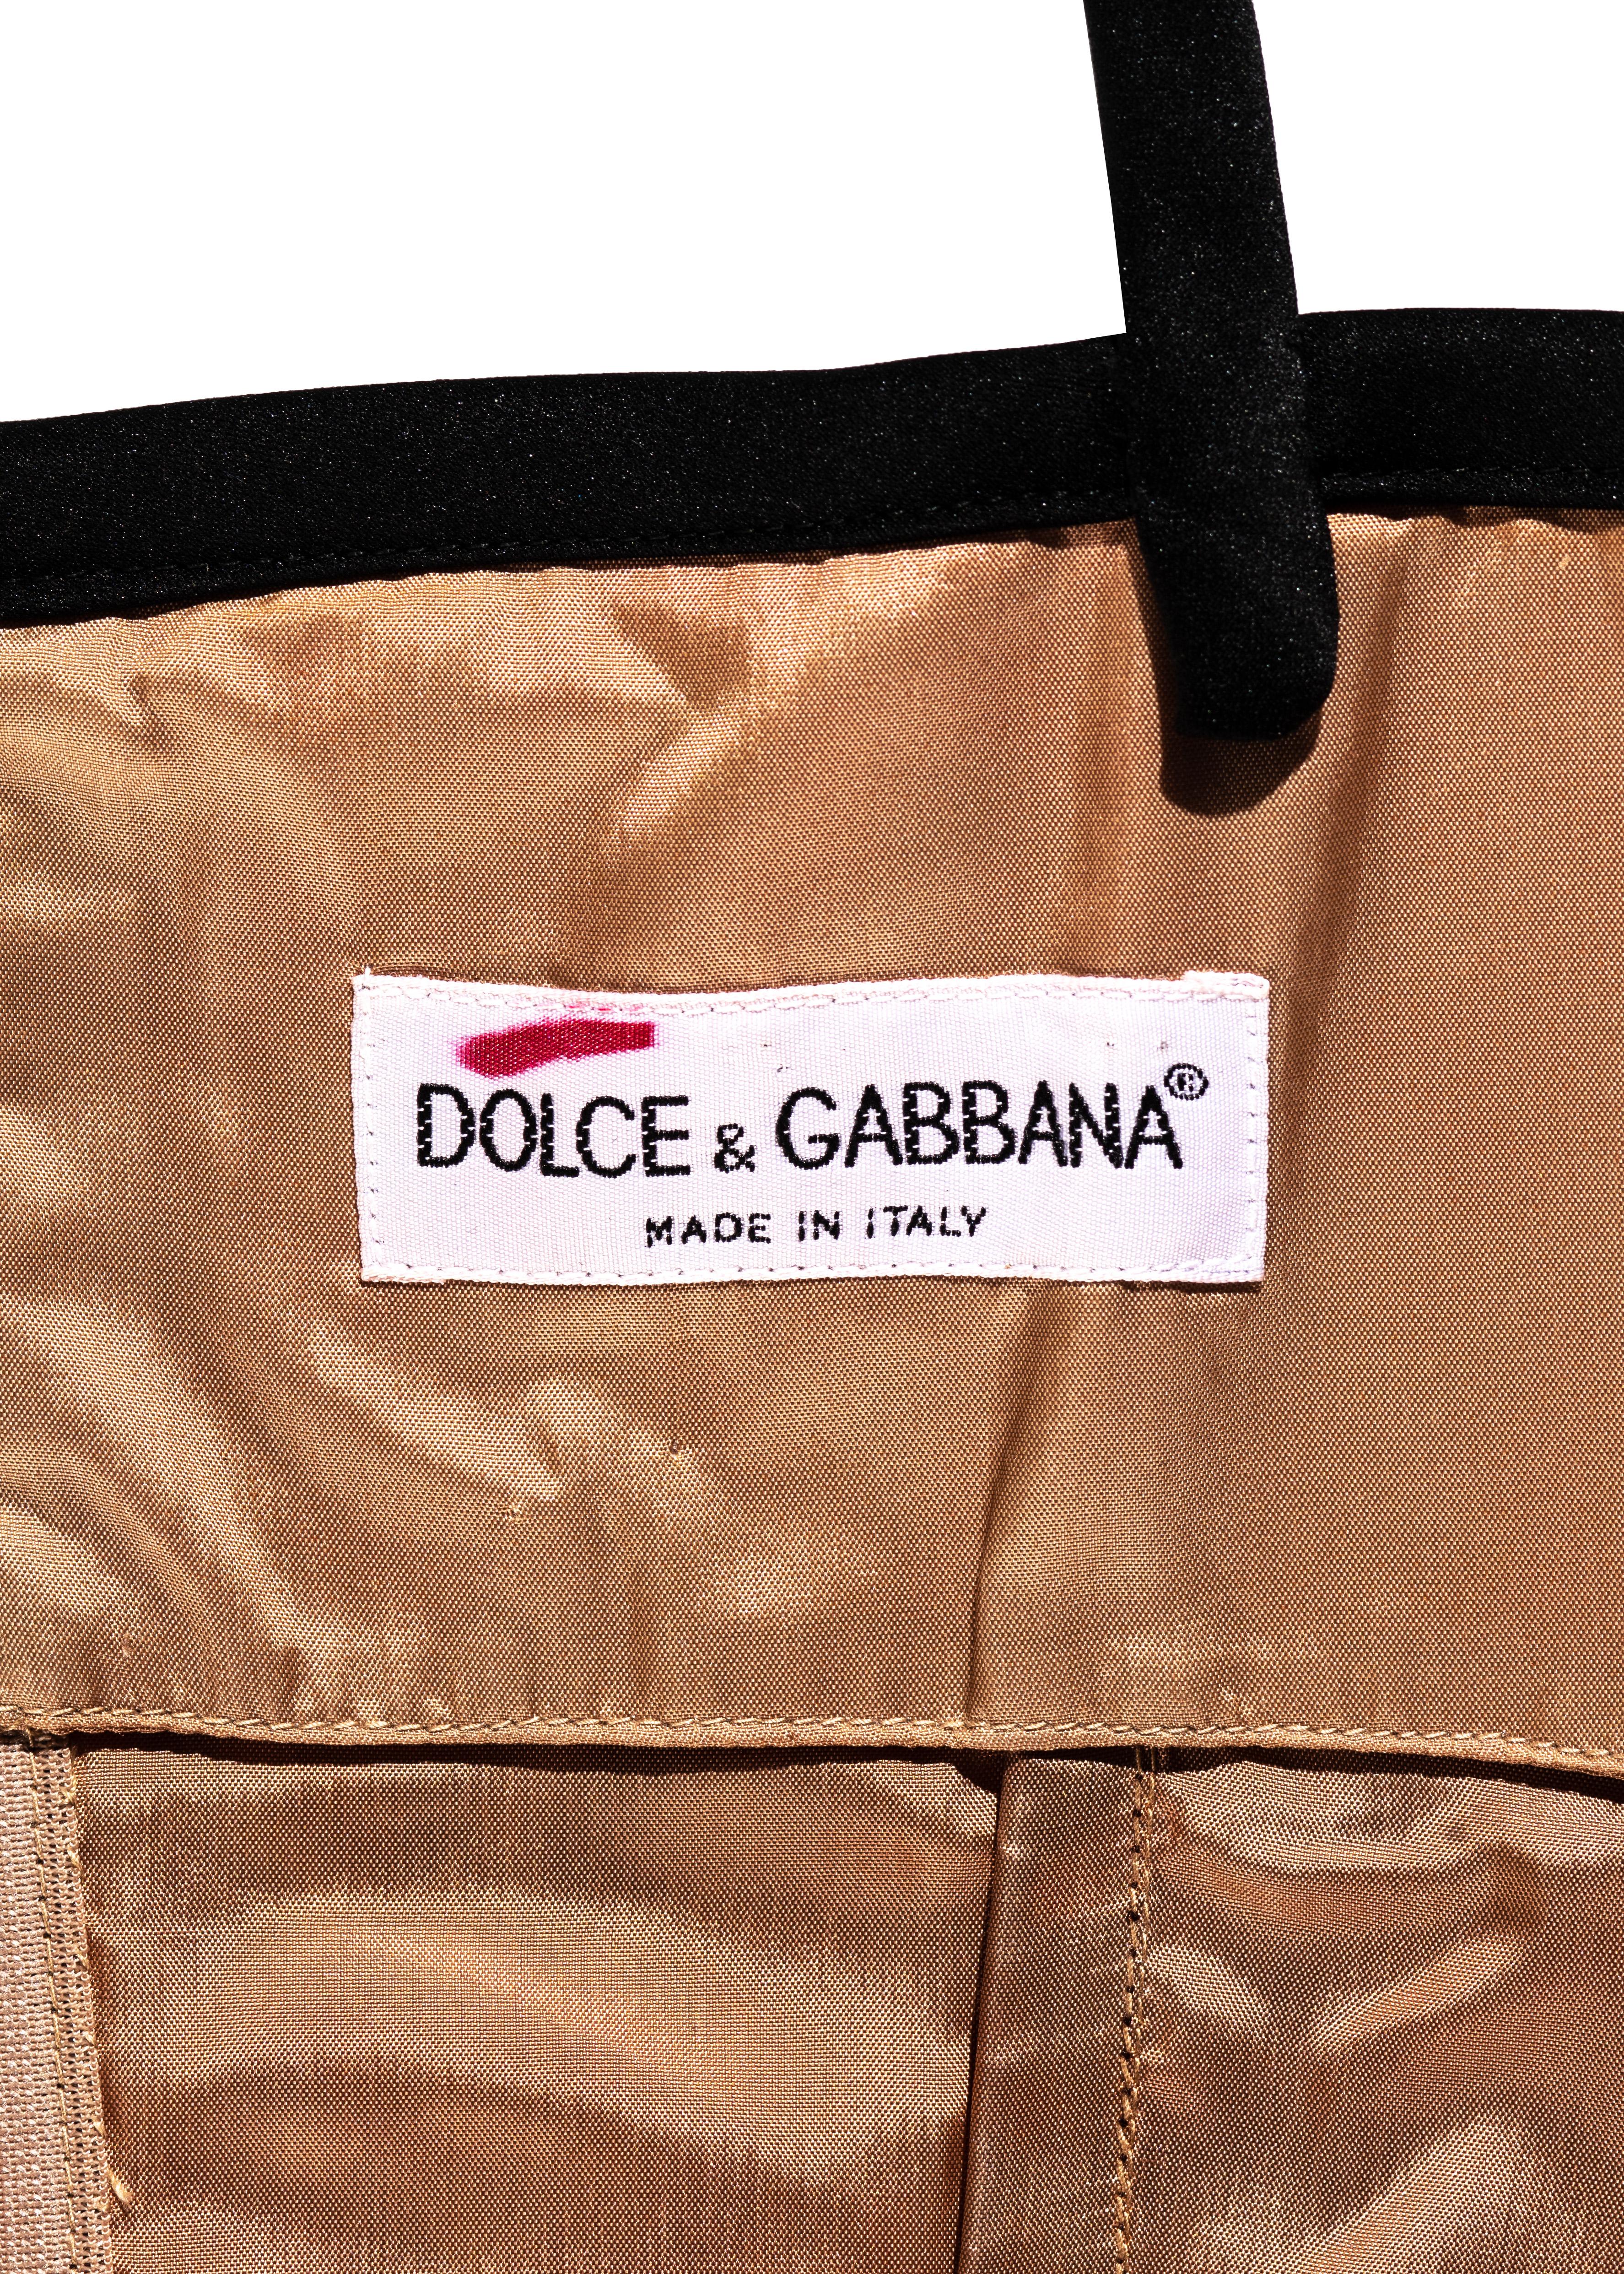 Dolce & Gabbana tortoiseshell print plastic mini dress, ss 1995 1